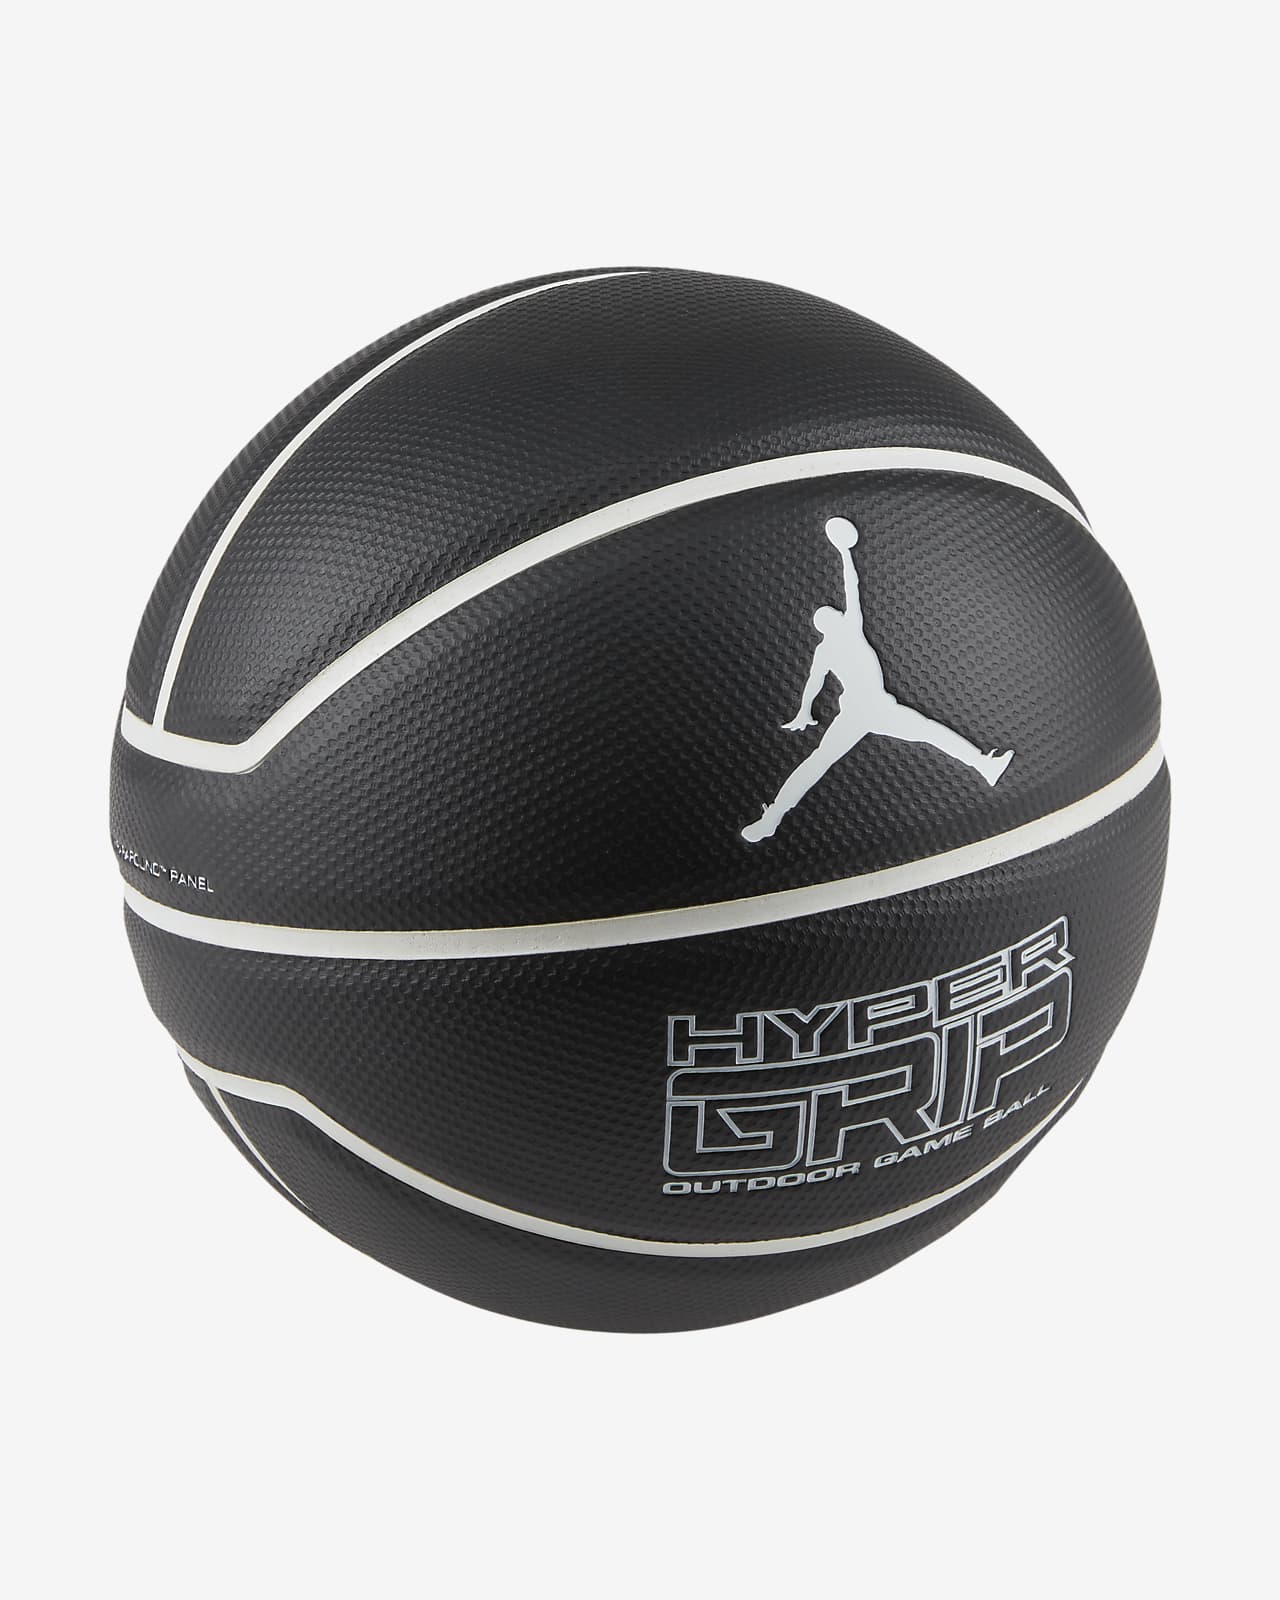 Jordan Hyper Grip 4P Basketball (Size 7)